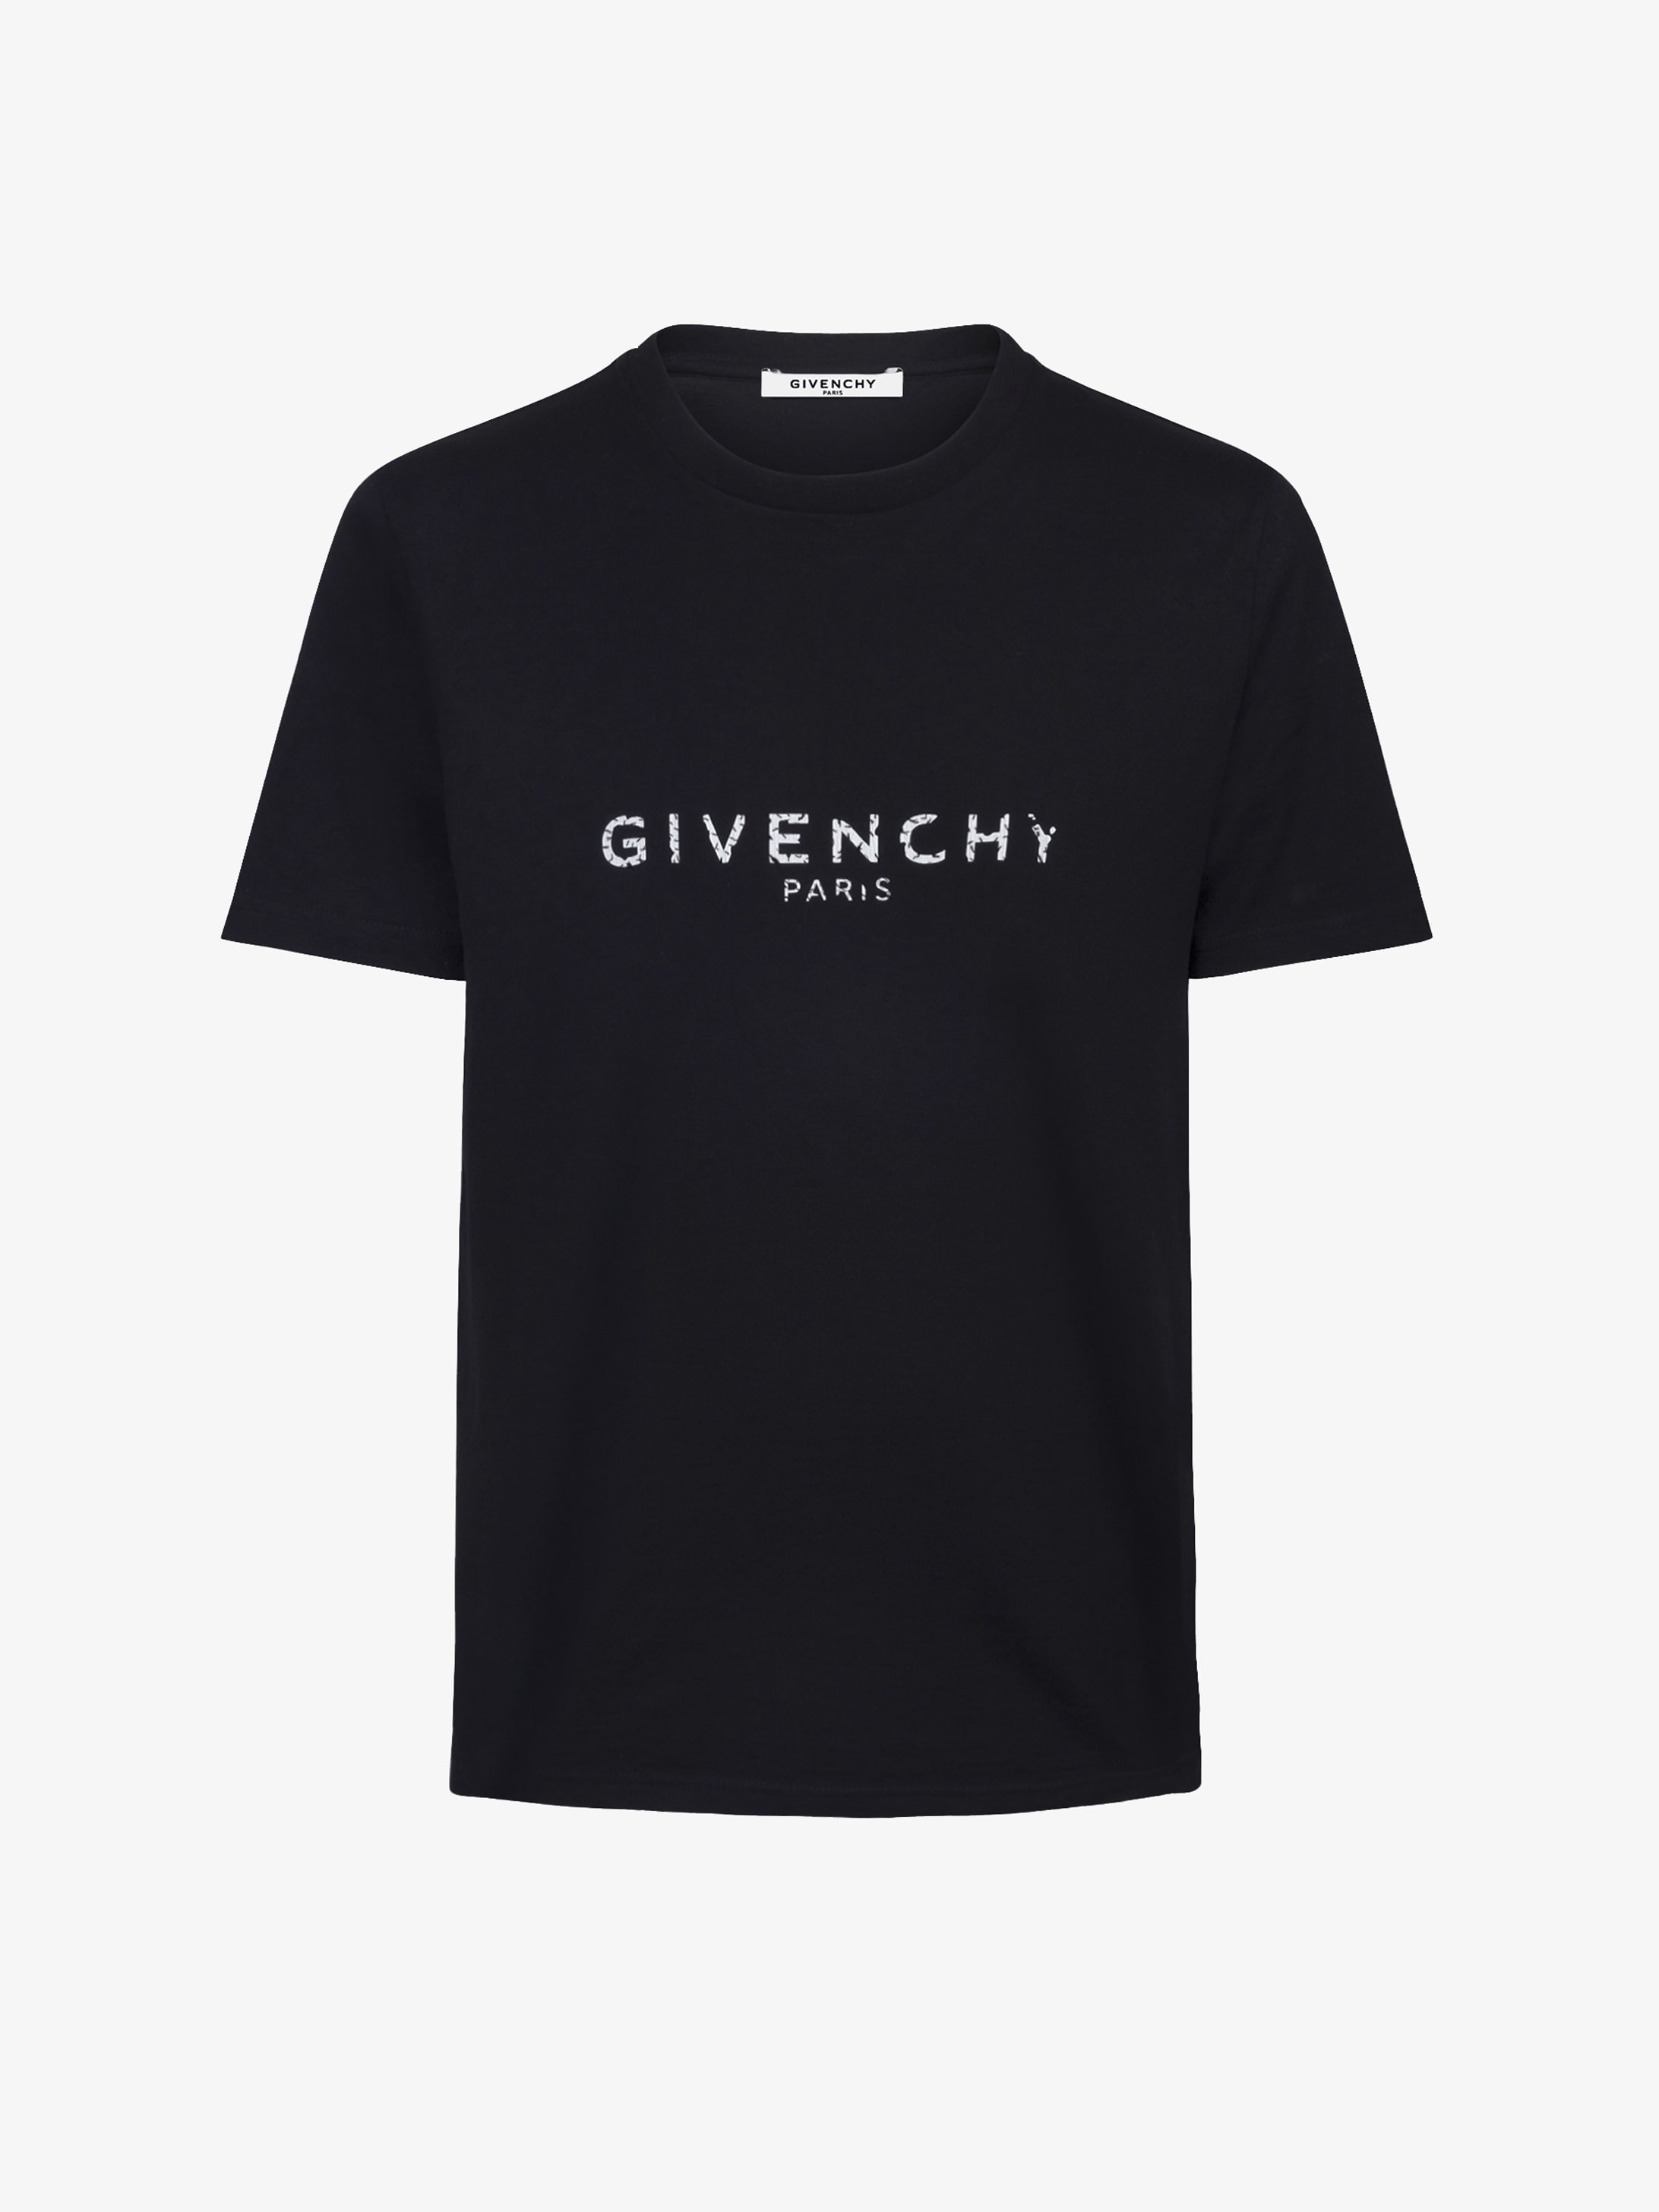 GIVENCHY PARIS オーバーサイズ Tシャツ 